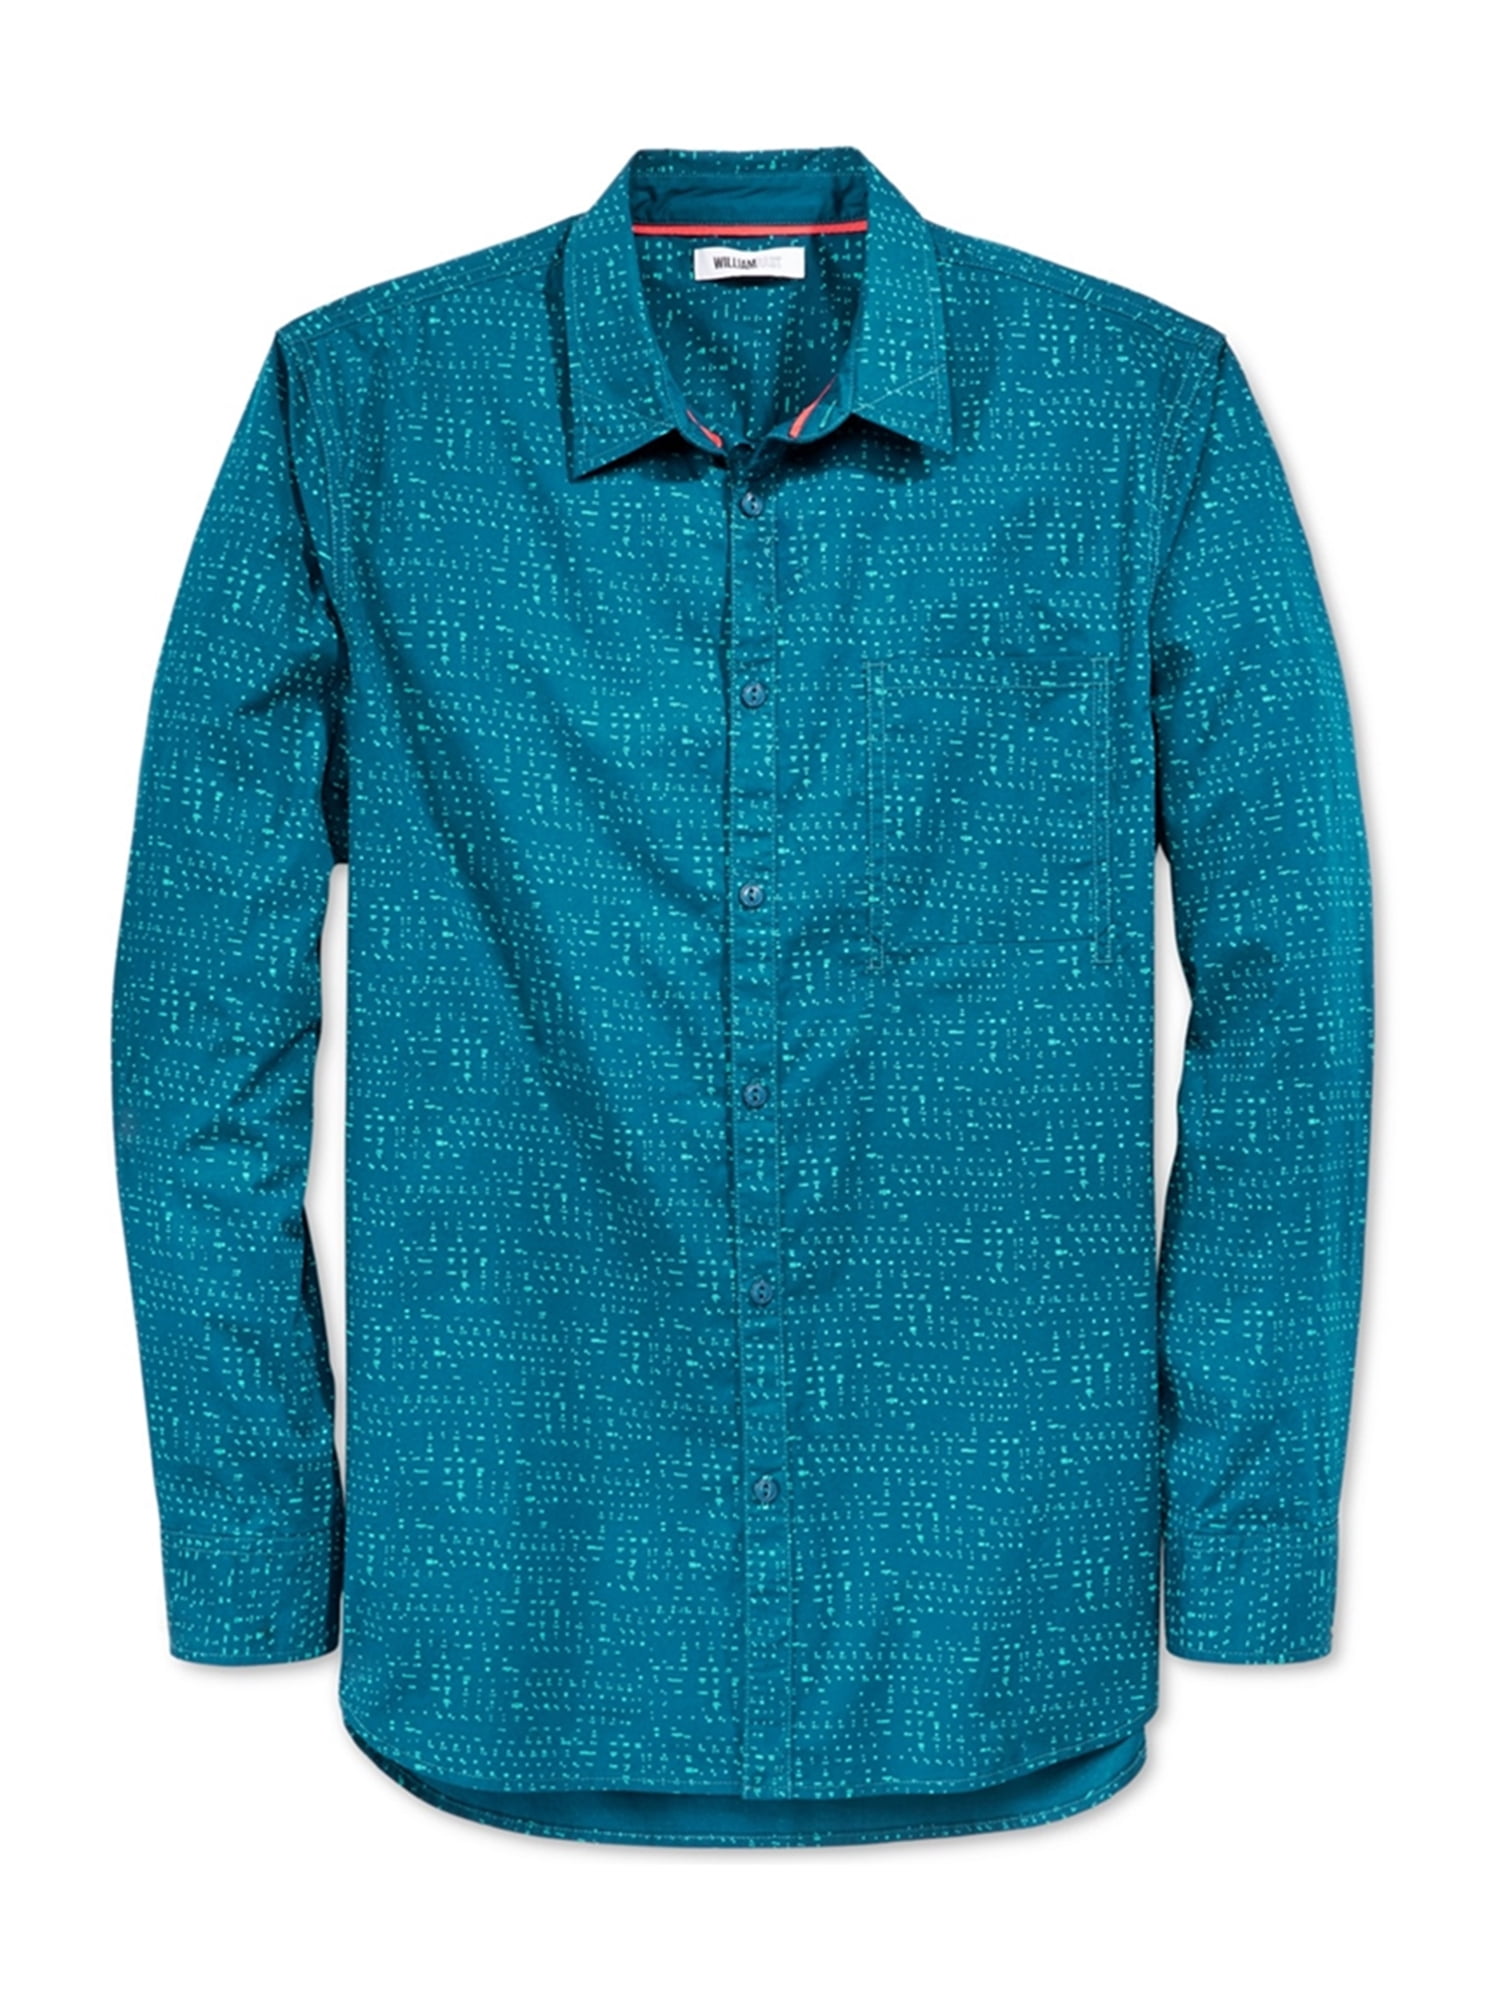 William Rast Mens Gage Woven Button Up Shirt blueopal L | Walmart Canada